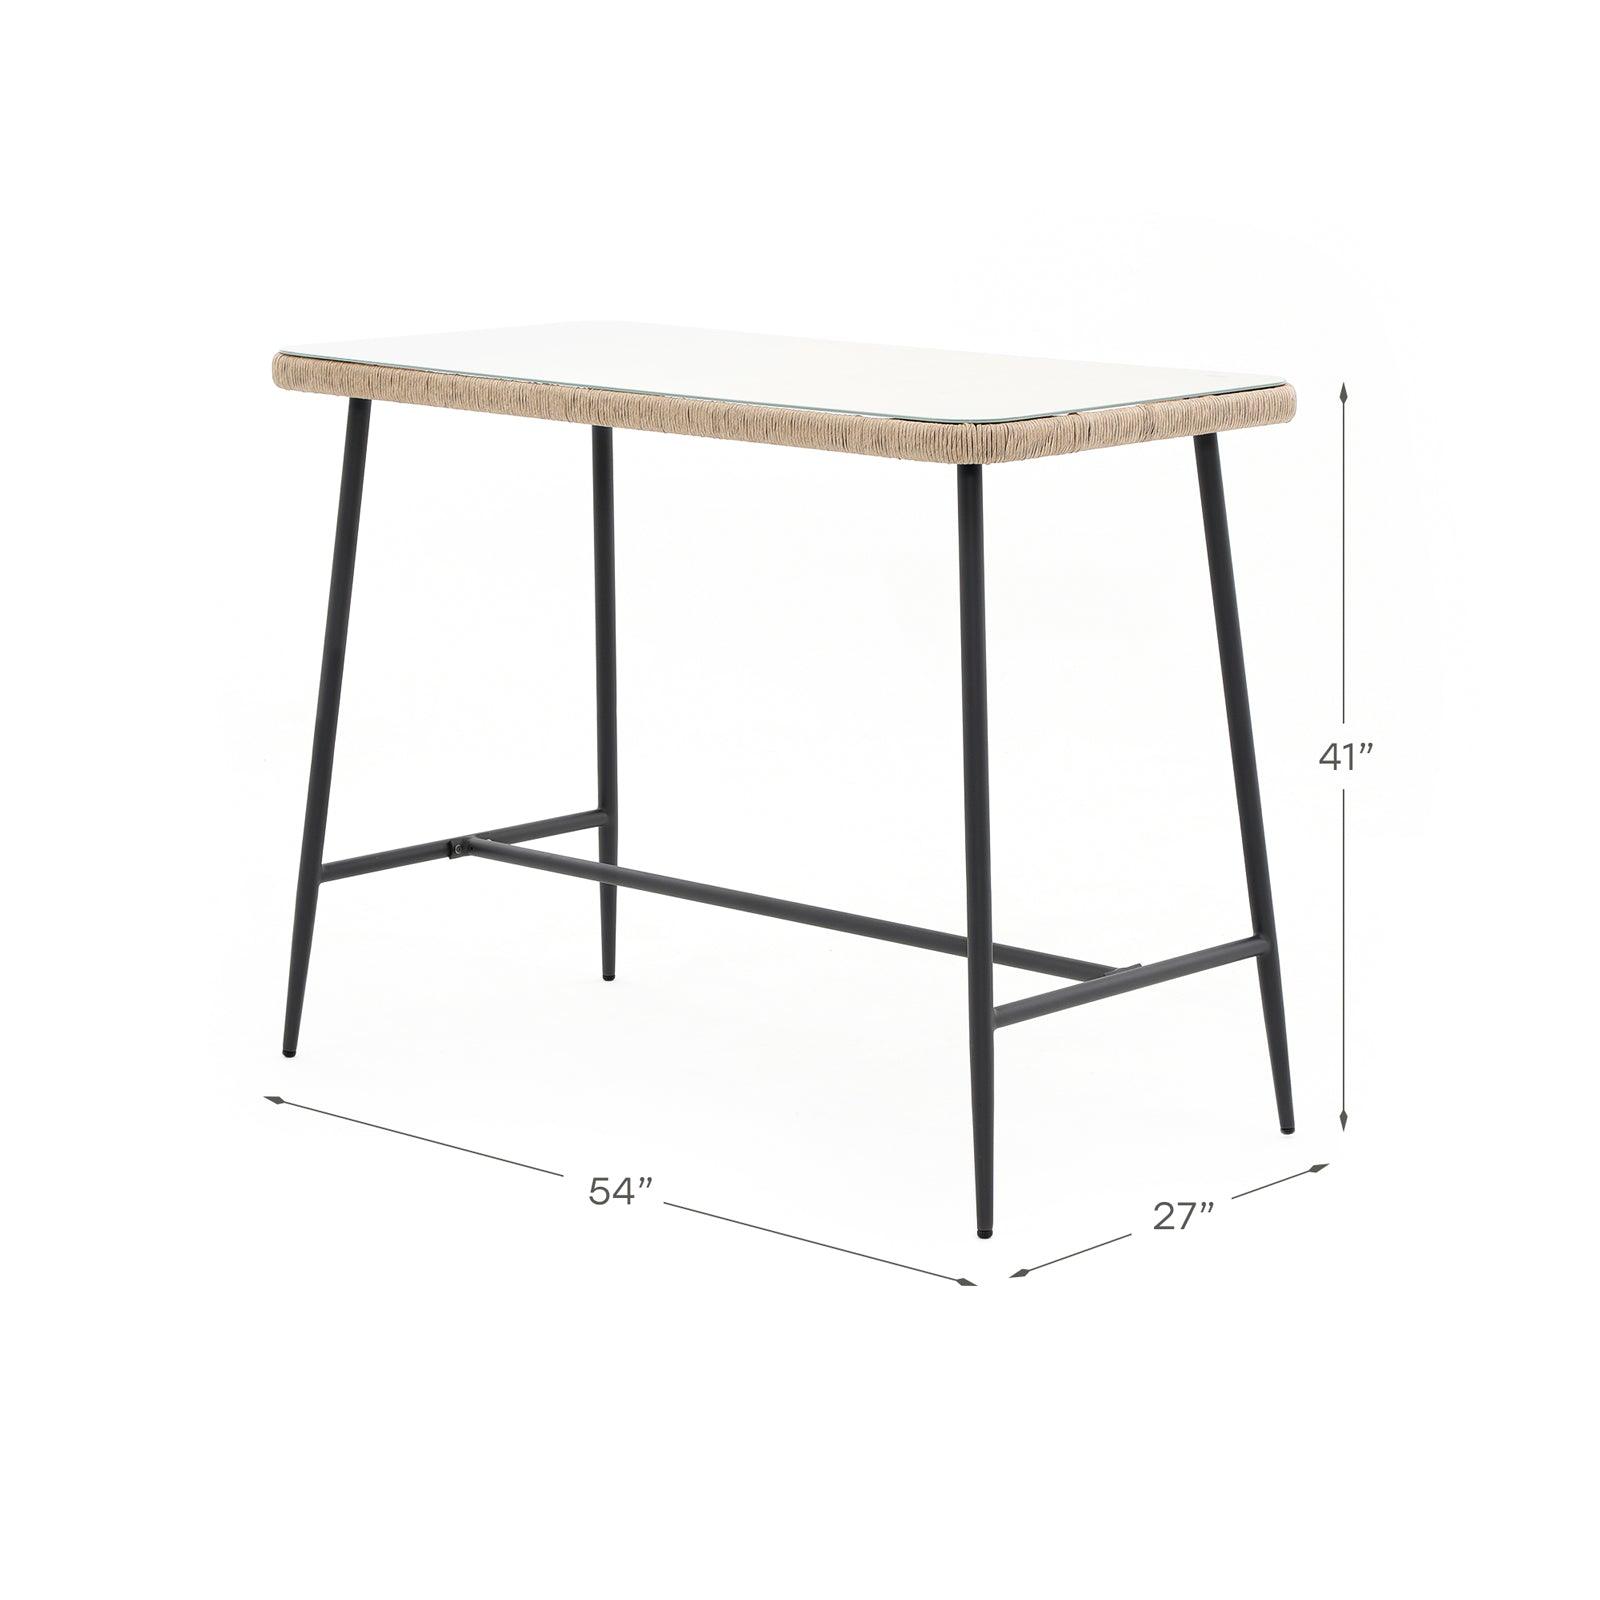 Hallerbos bar table dimension info - Jardina Furniture